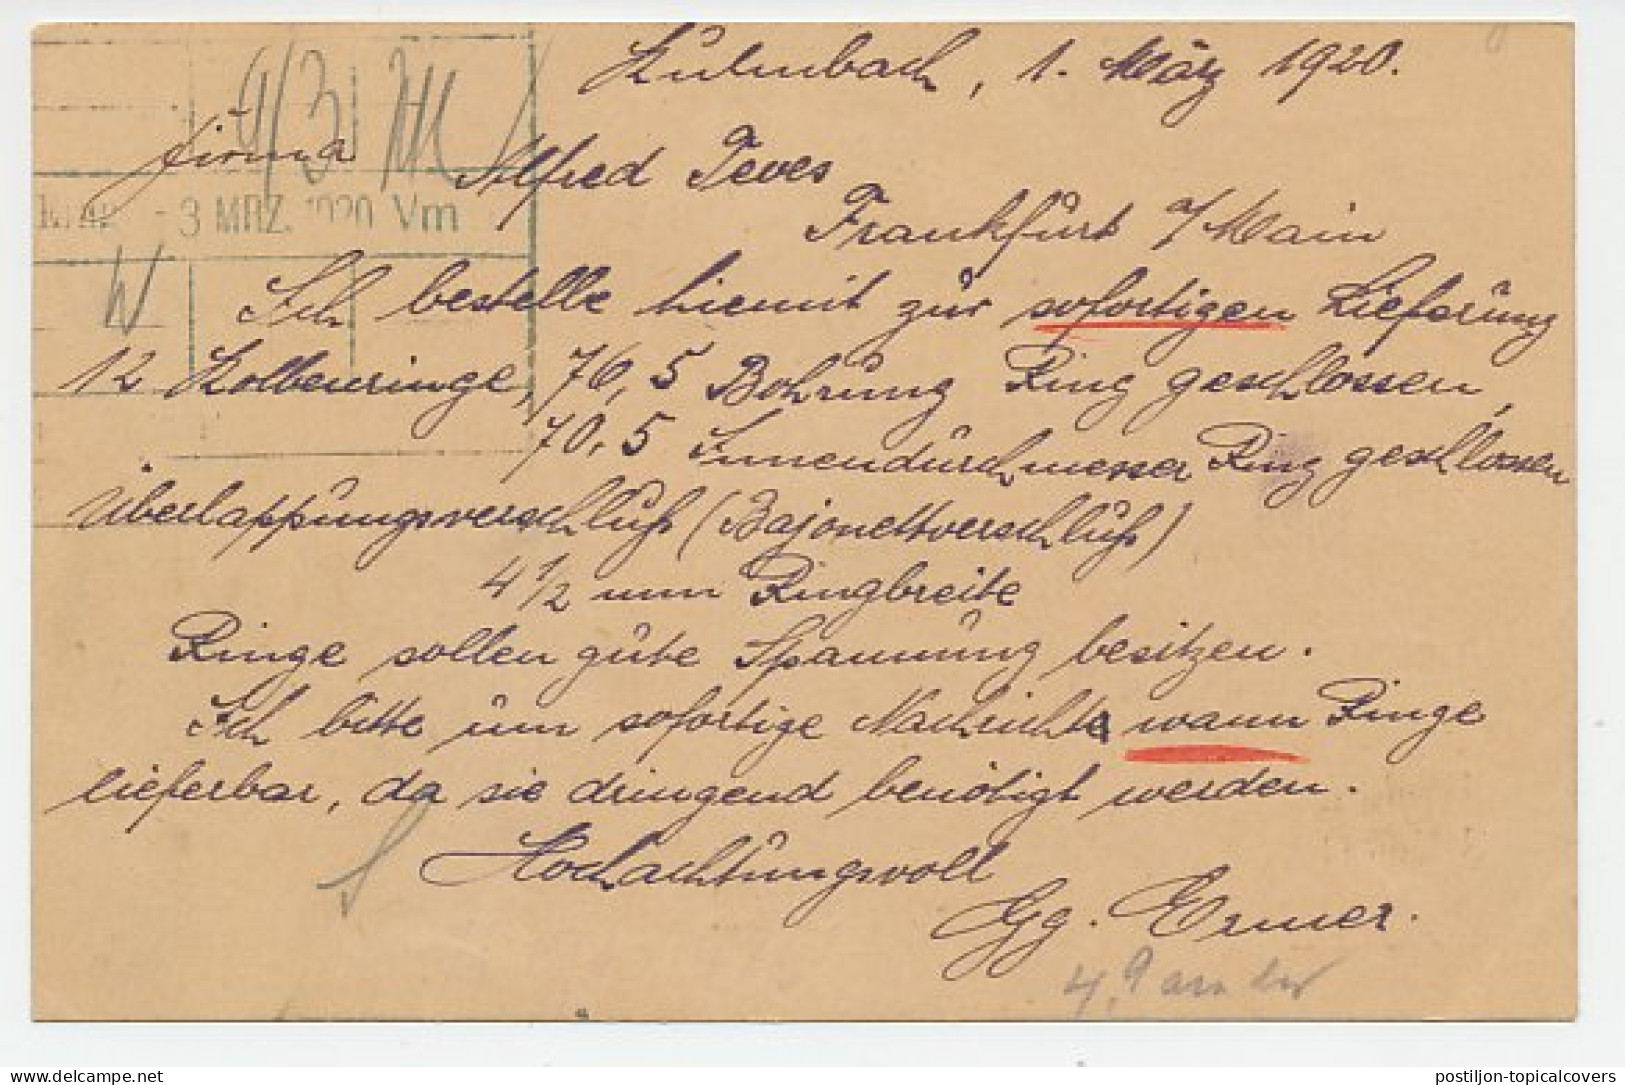 Postal Stationery / Cachet Bayern / Germany 1920 Car - Voitures